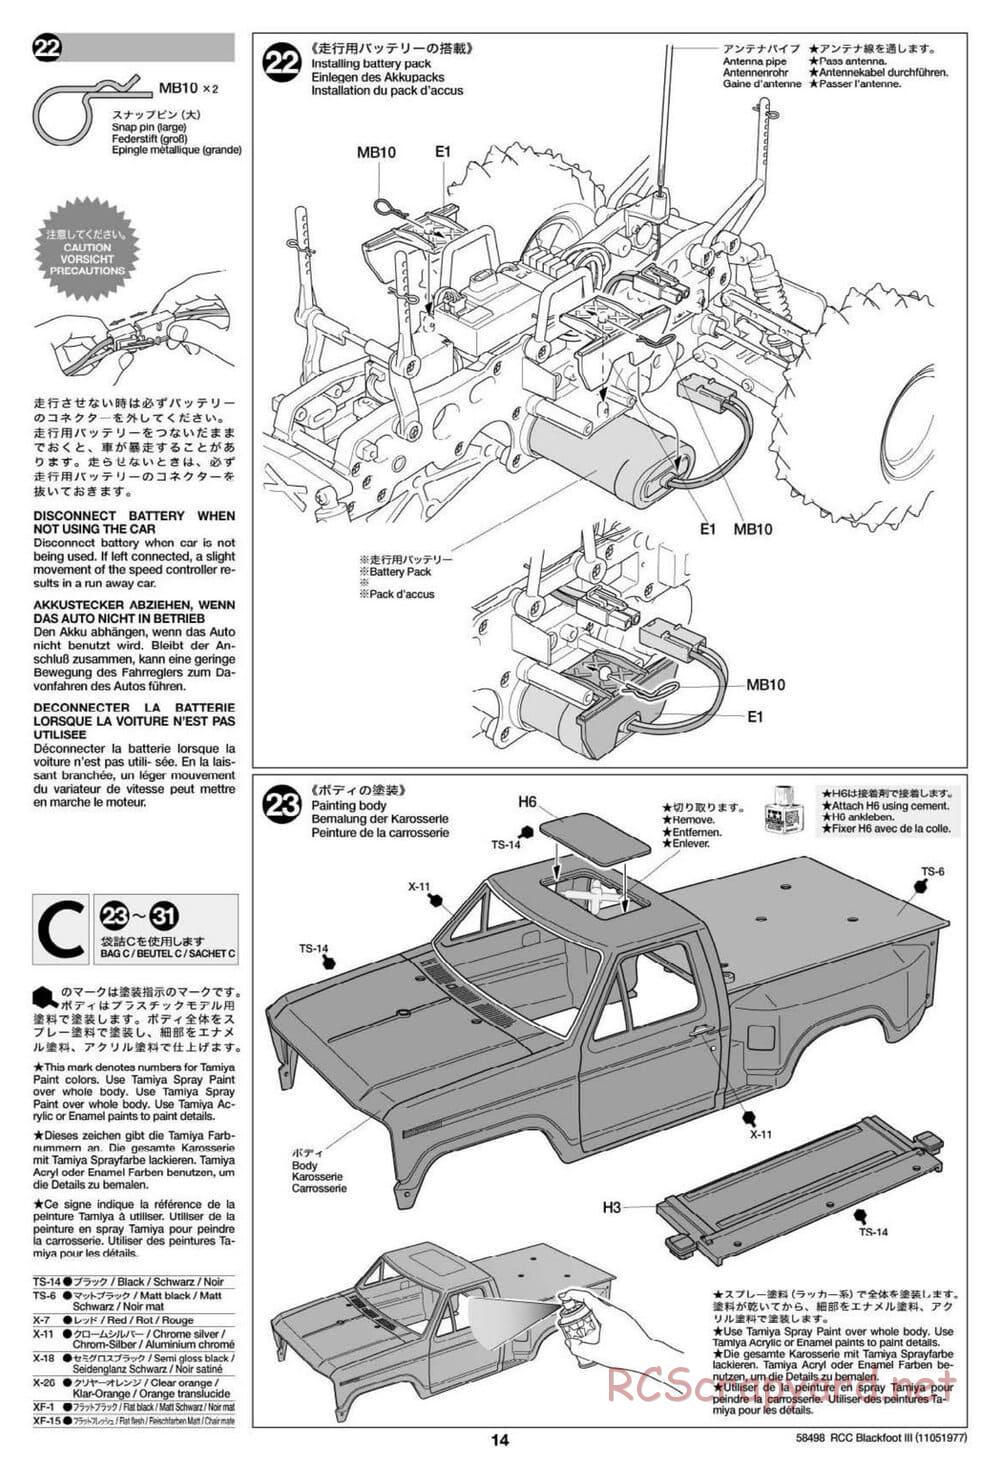 Tamiya - Blackfoot III - WT-01 Chassis - Manual - Page 14